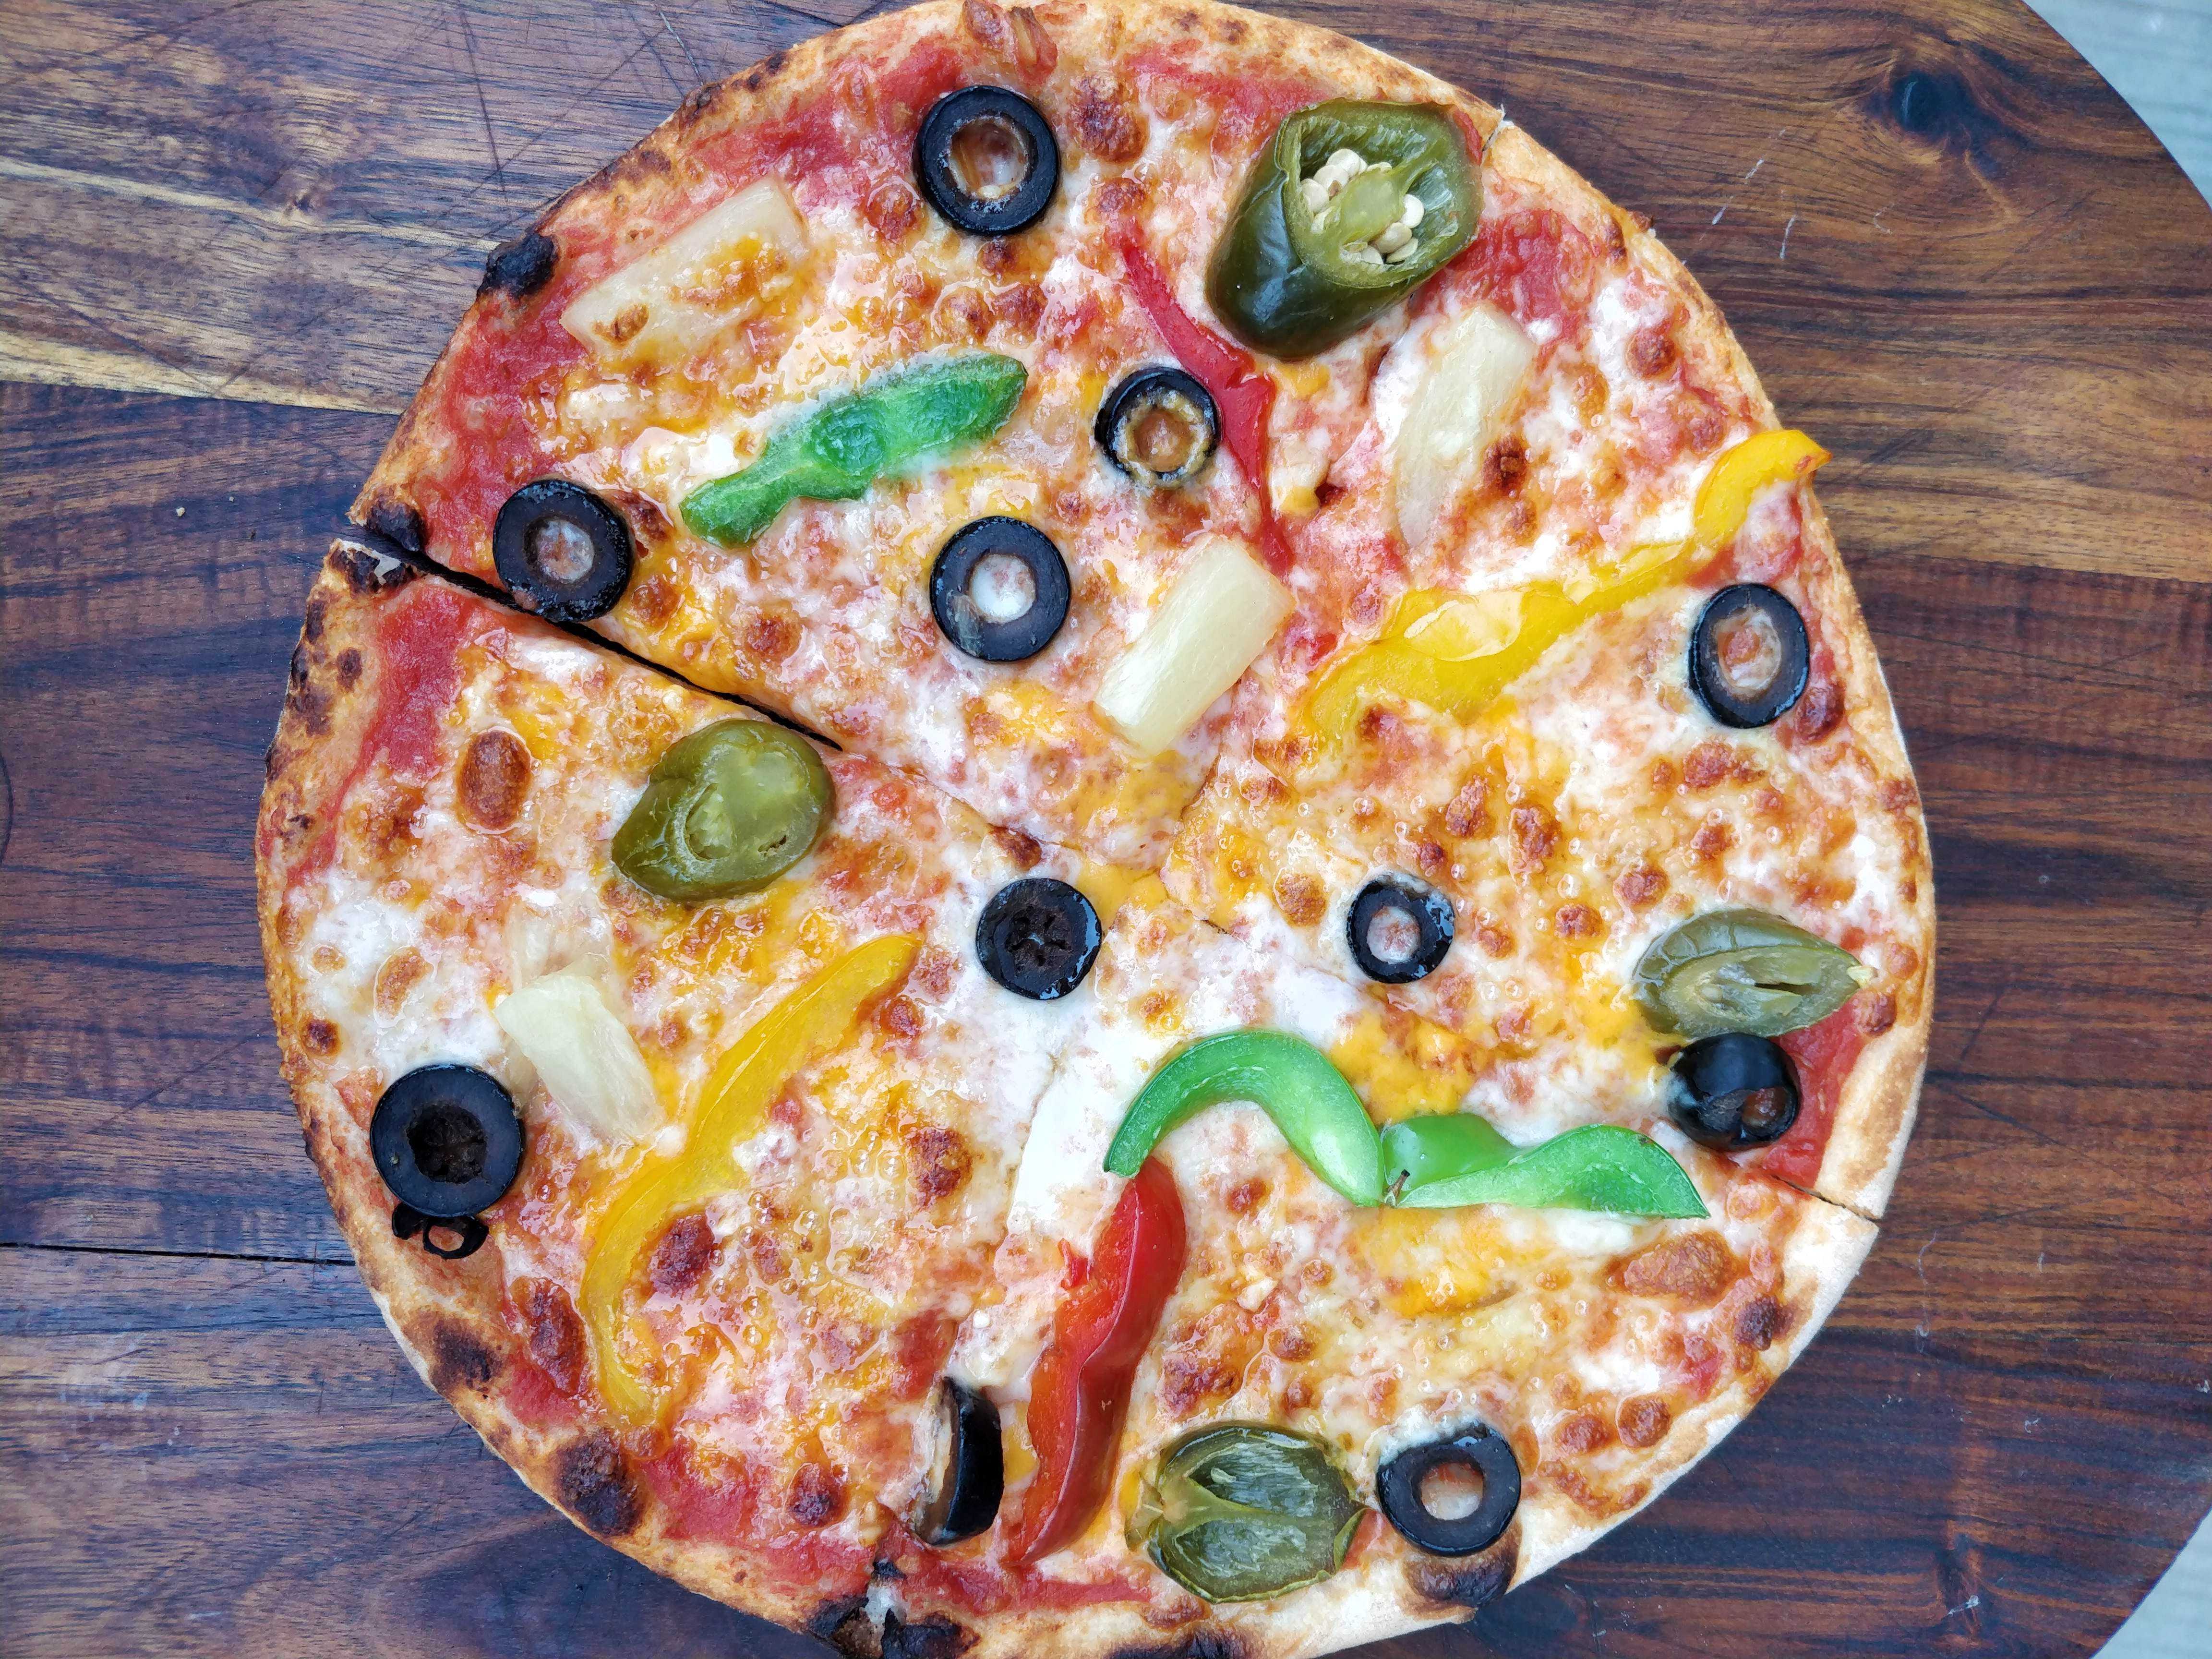 Dish,Pizza,Food,Cuisine,Pizza cheese,California-style pizza,Ingredient,Flatbread,Italian food,Junk food